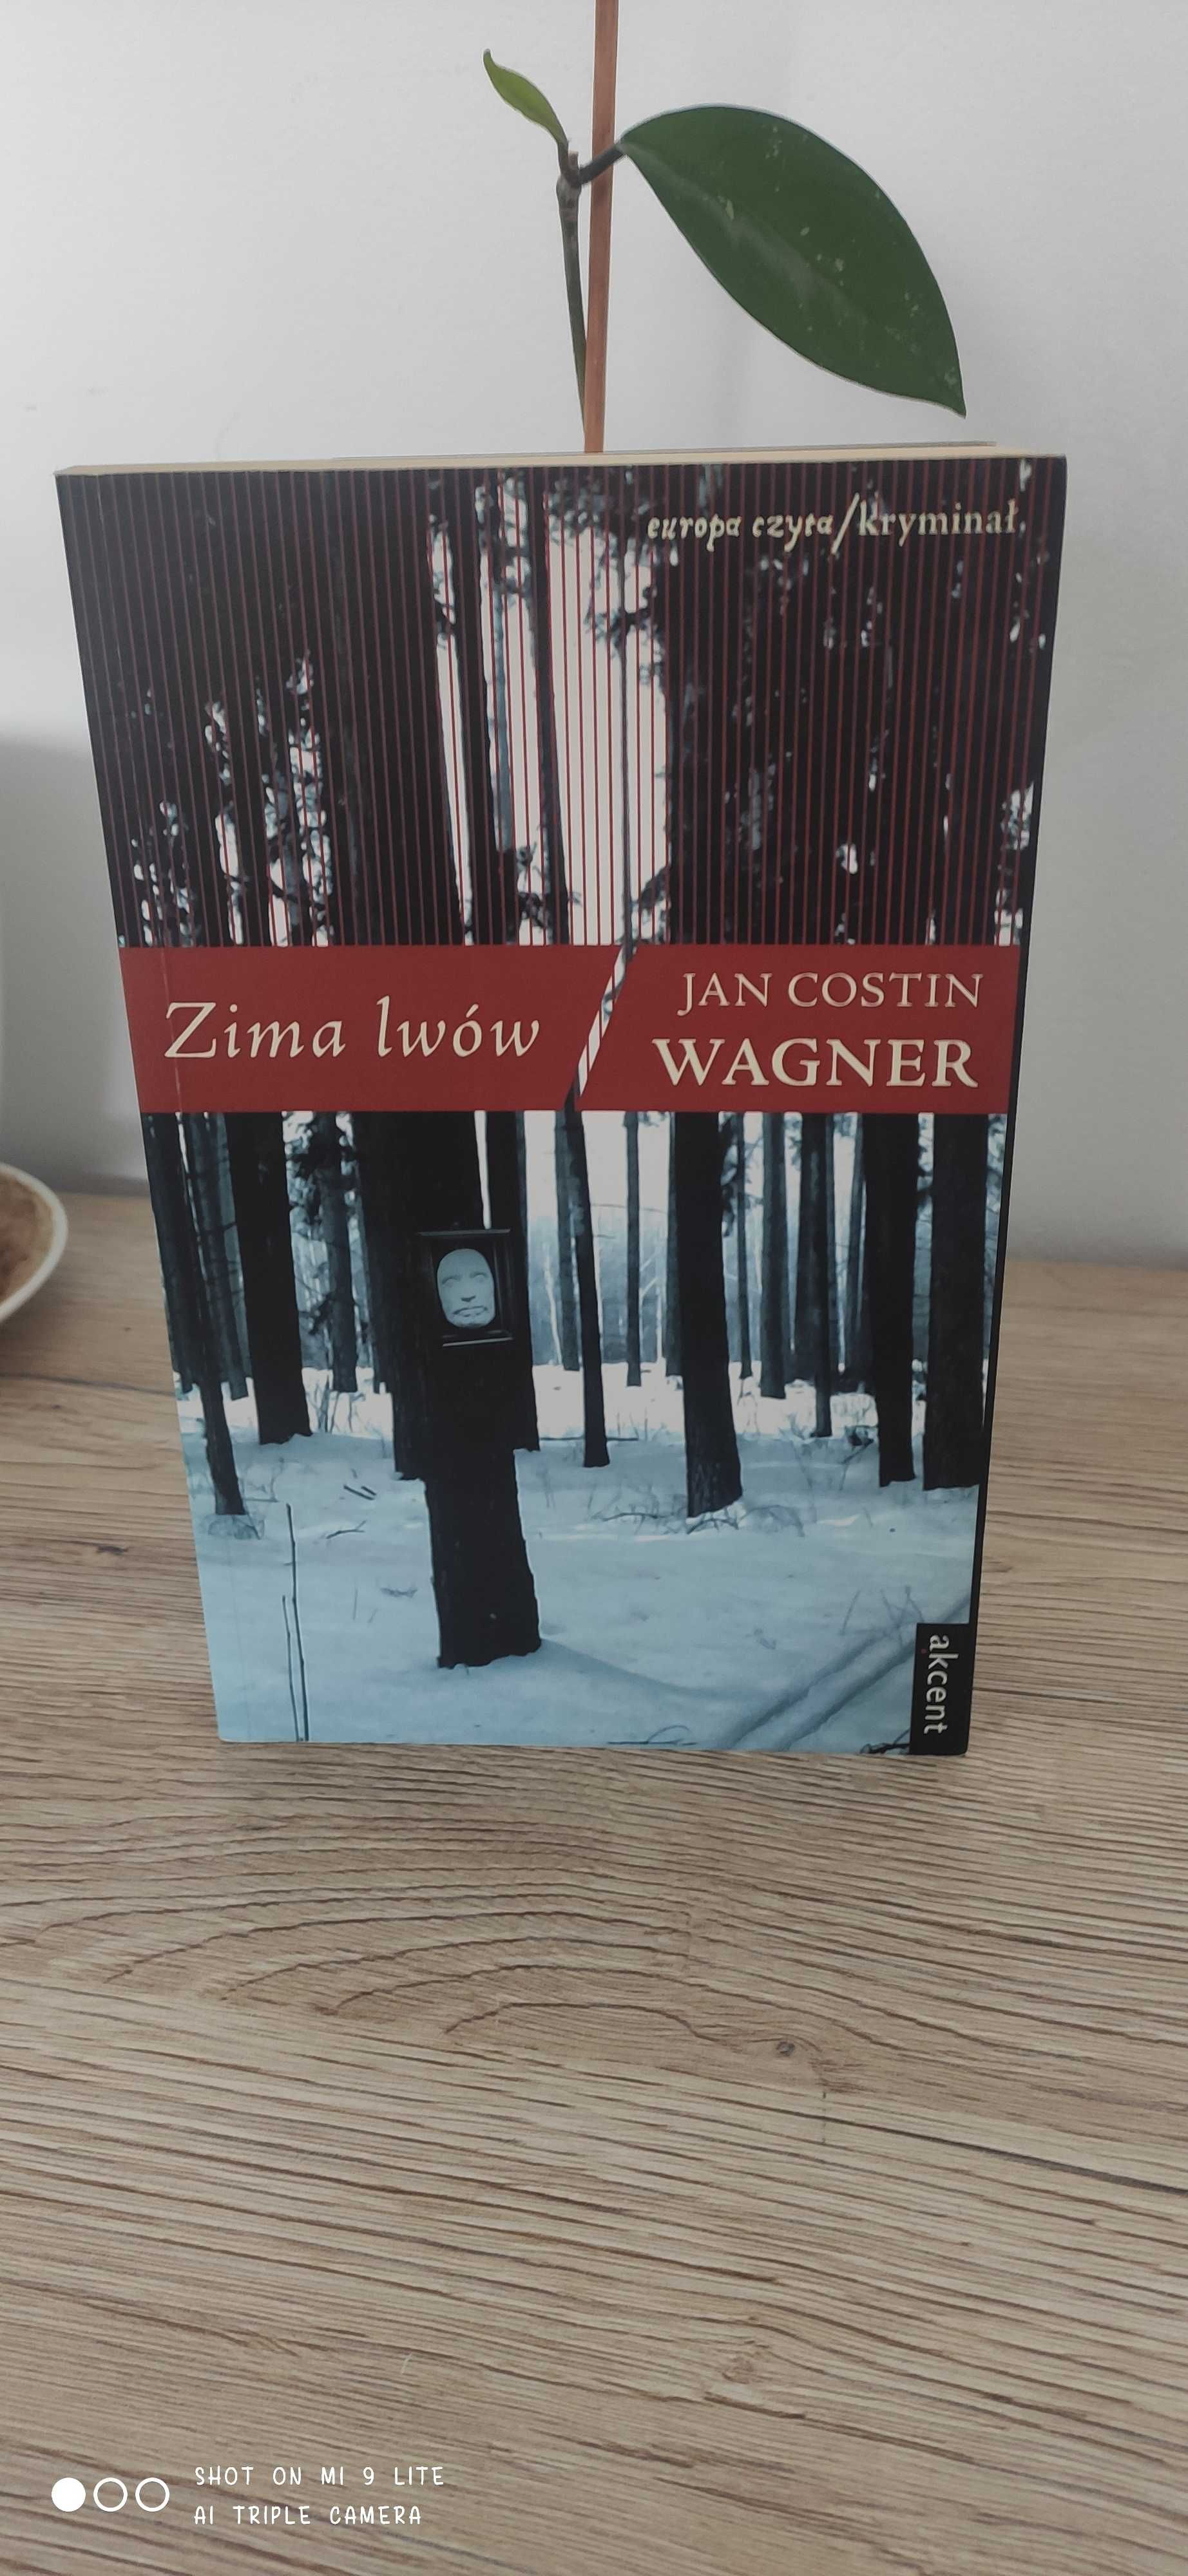 Książka Jana Costina Wagnera "Zima lwów".